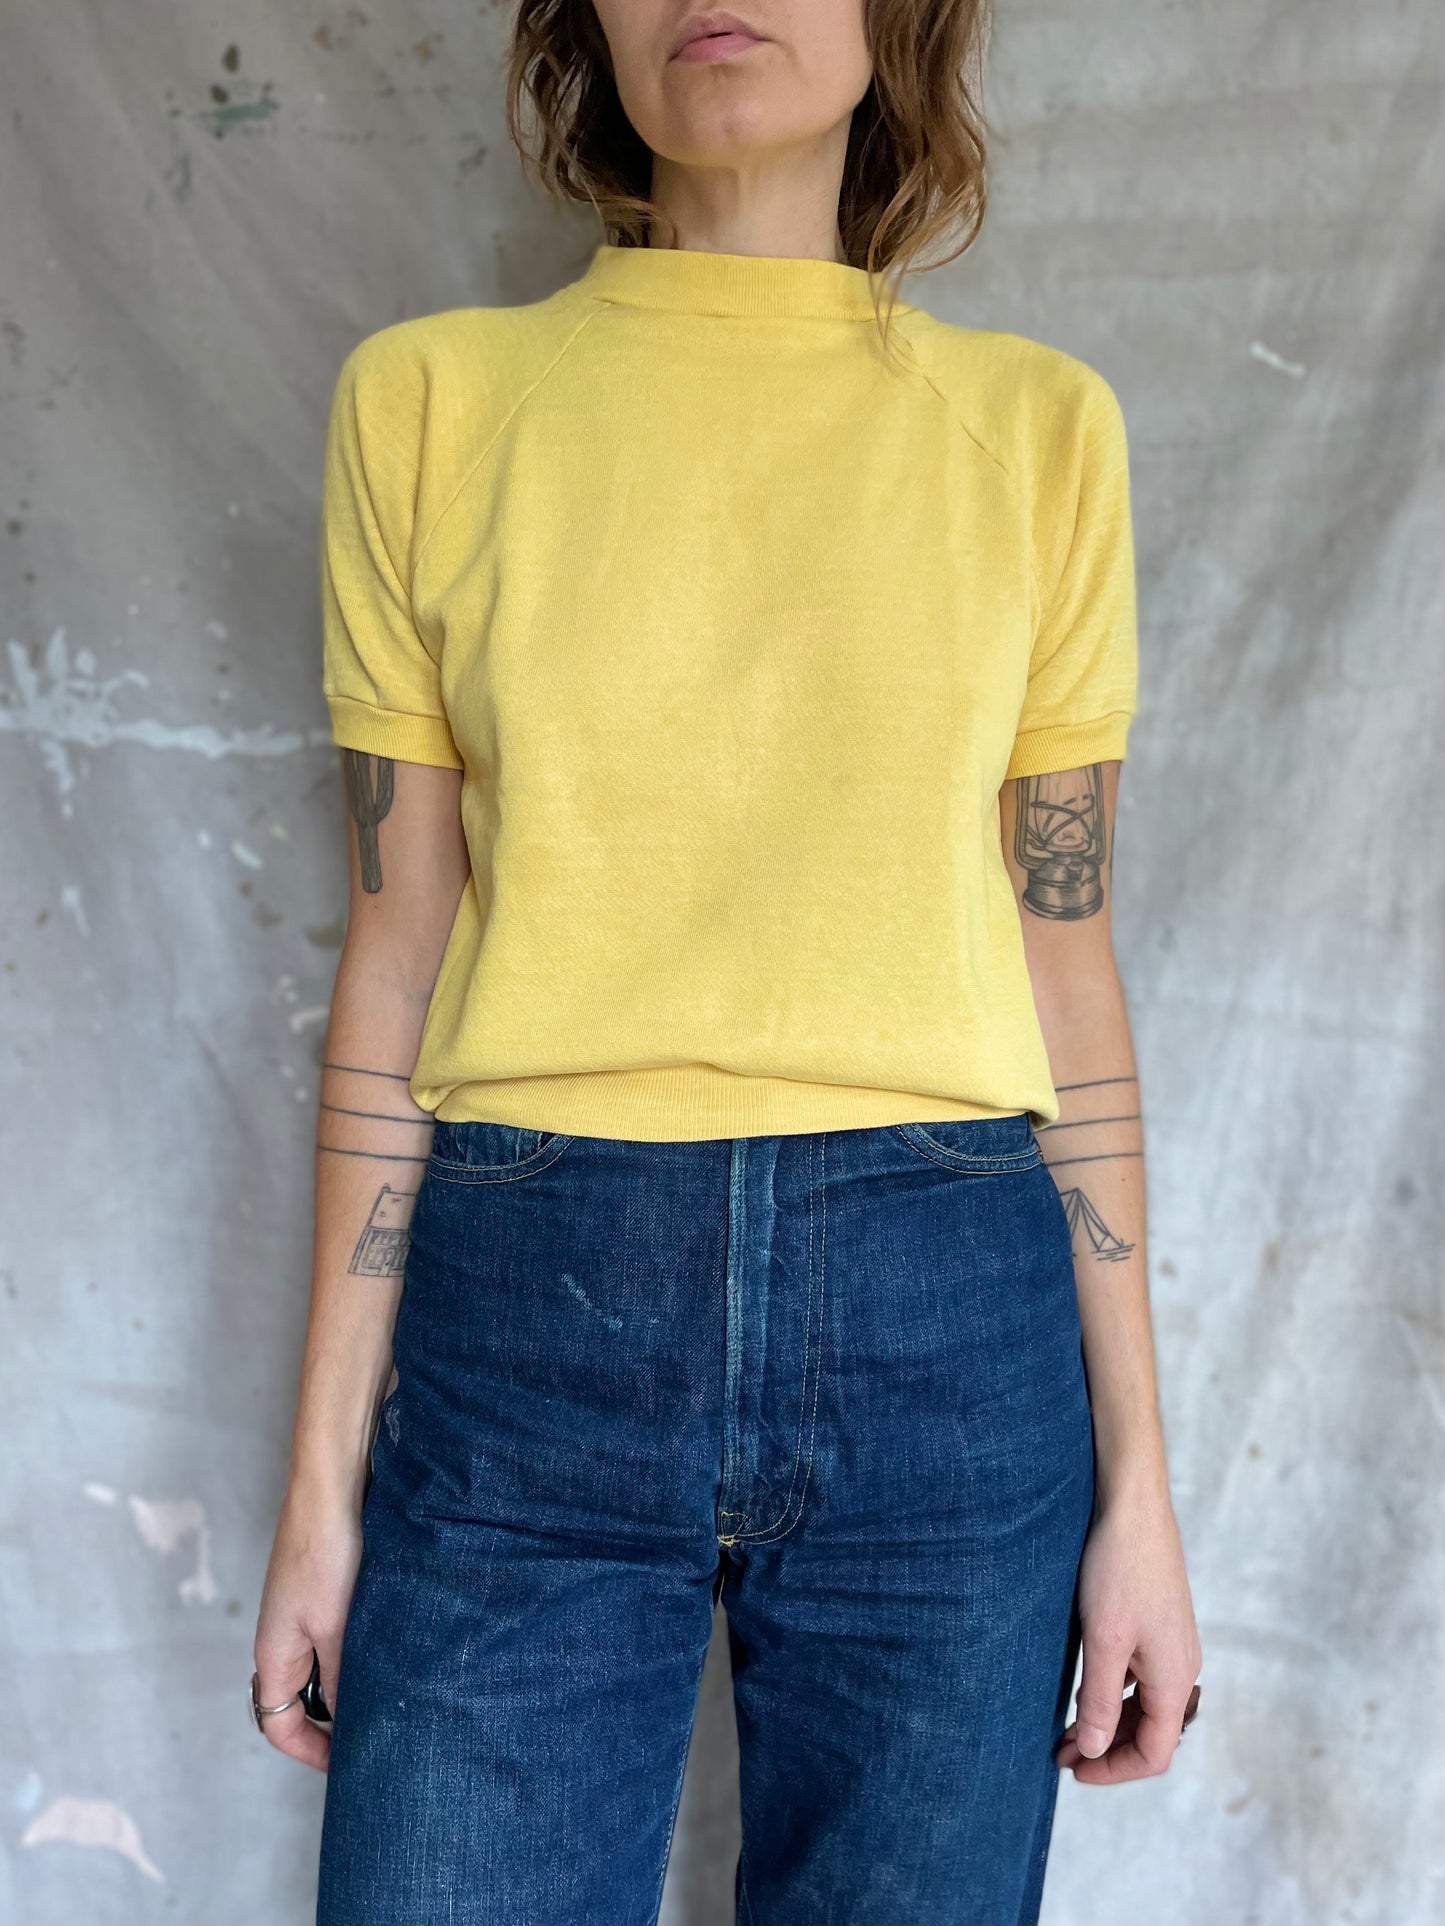 70s Blank Yellow Short Sleeve Sweatshirt